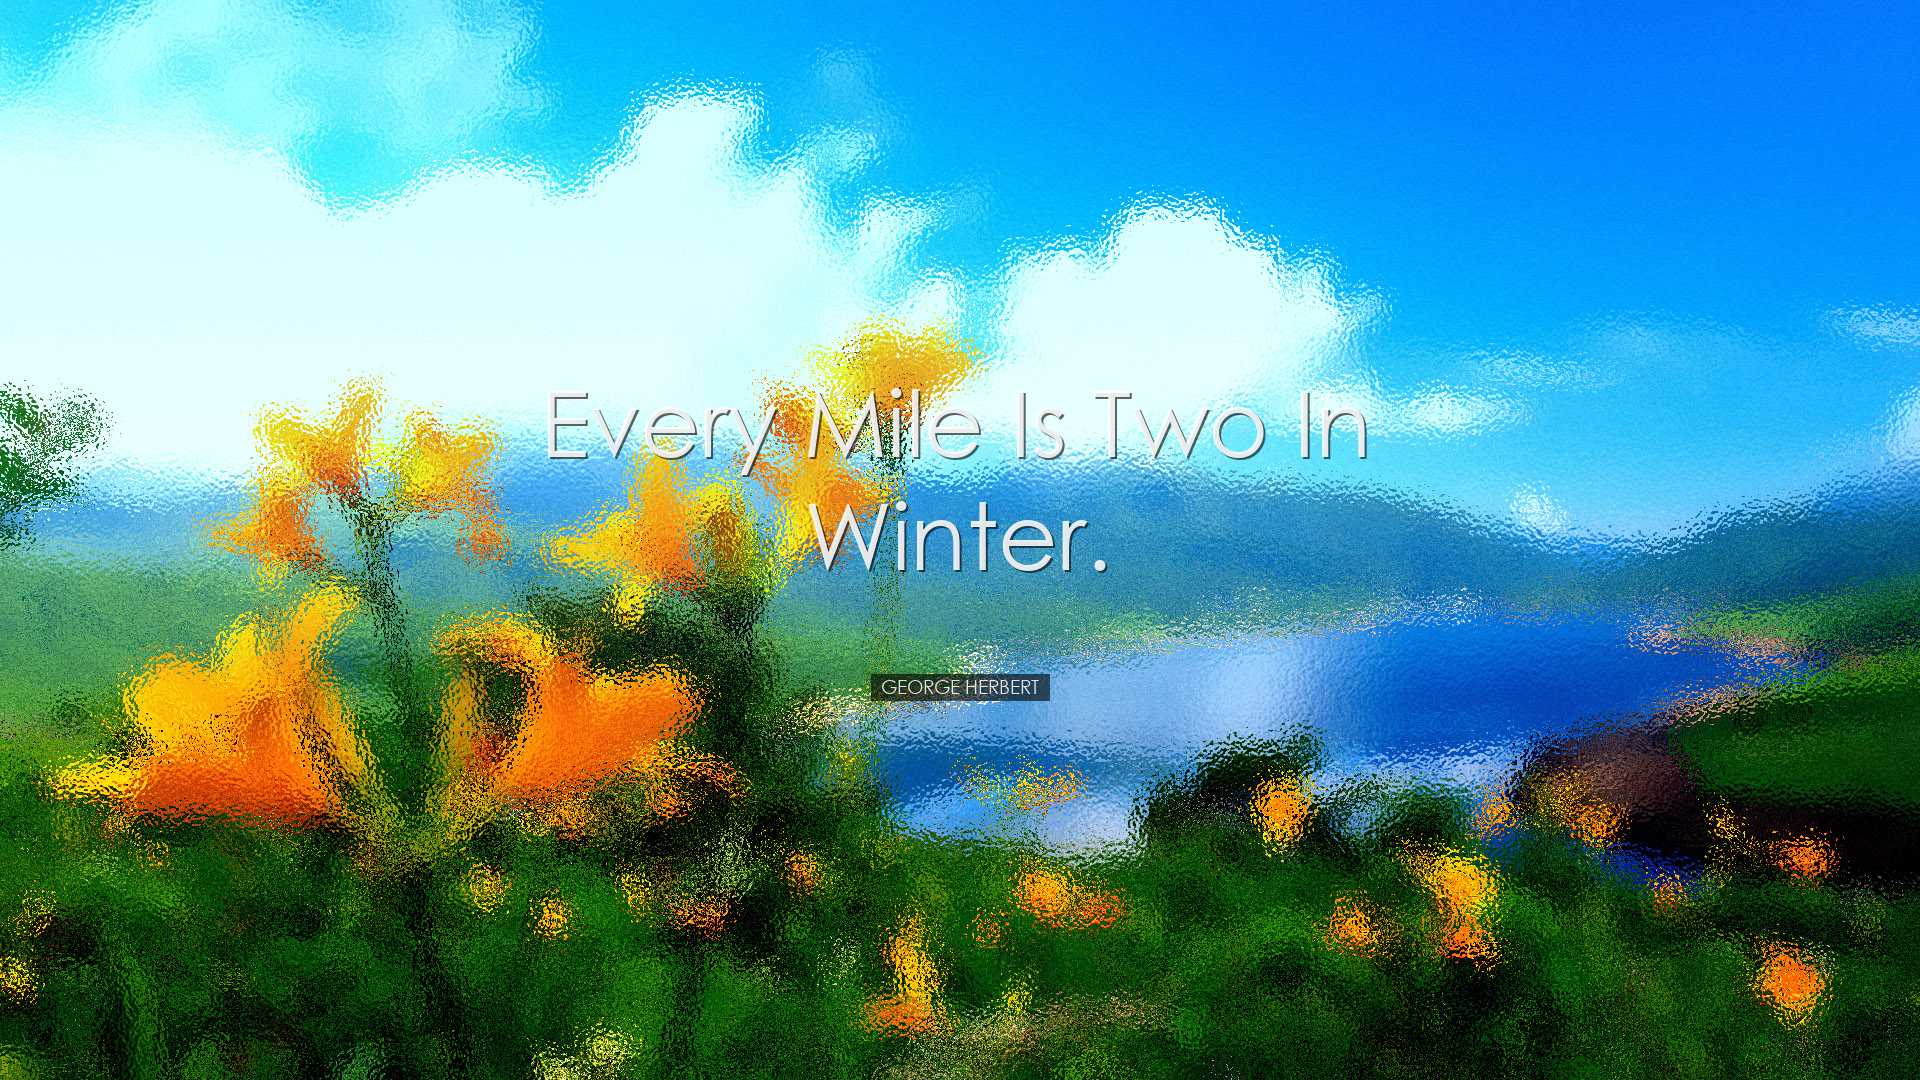 Every mile is two in winter. - George Herbert